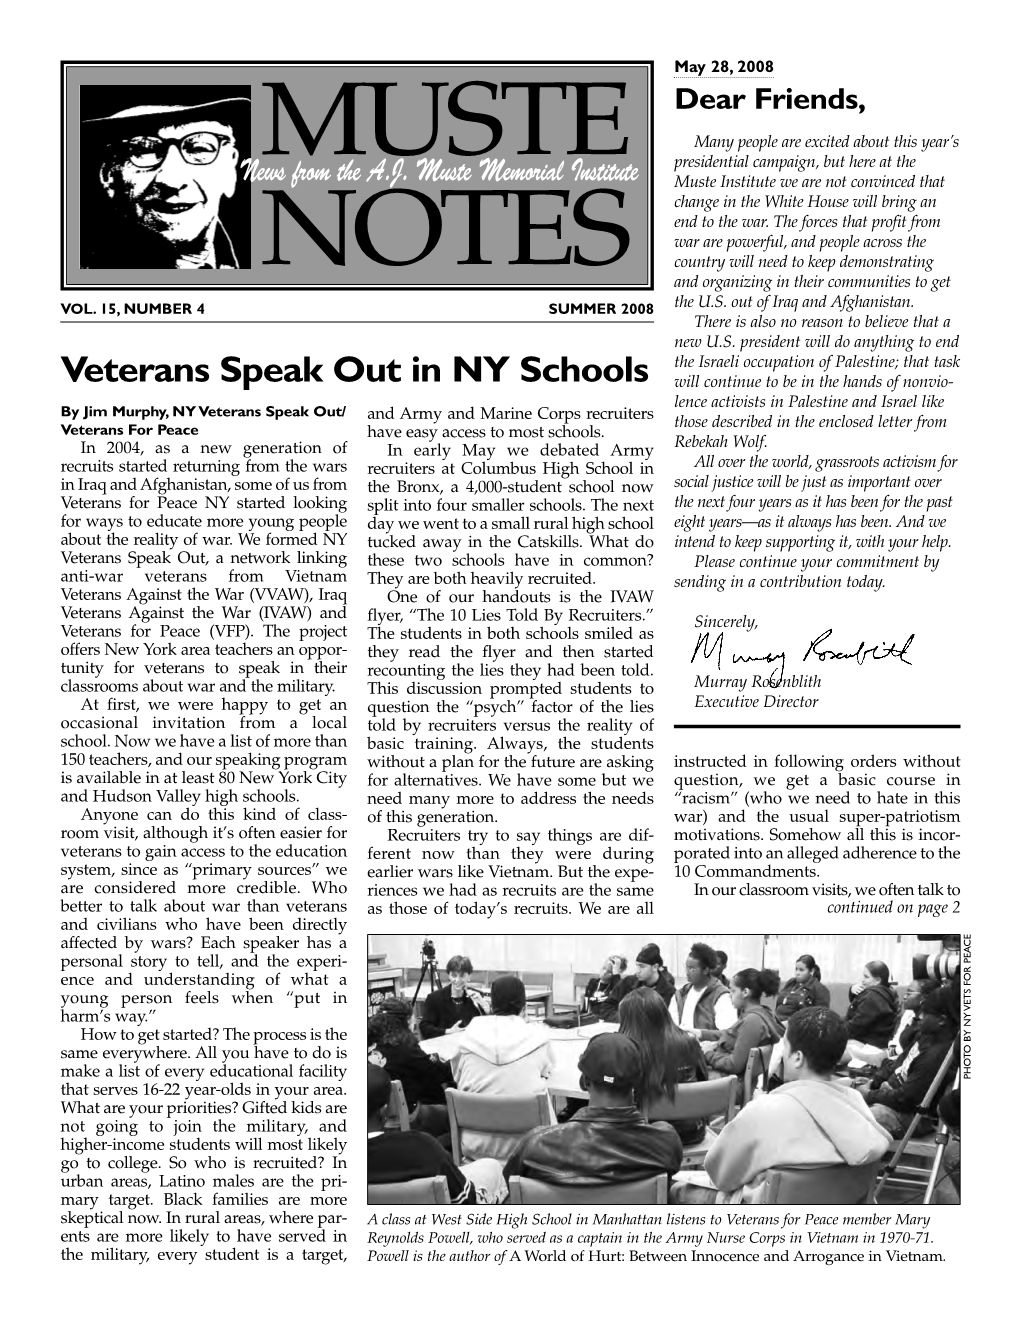 Veterans Speak out in NY Schools